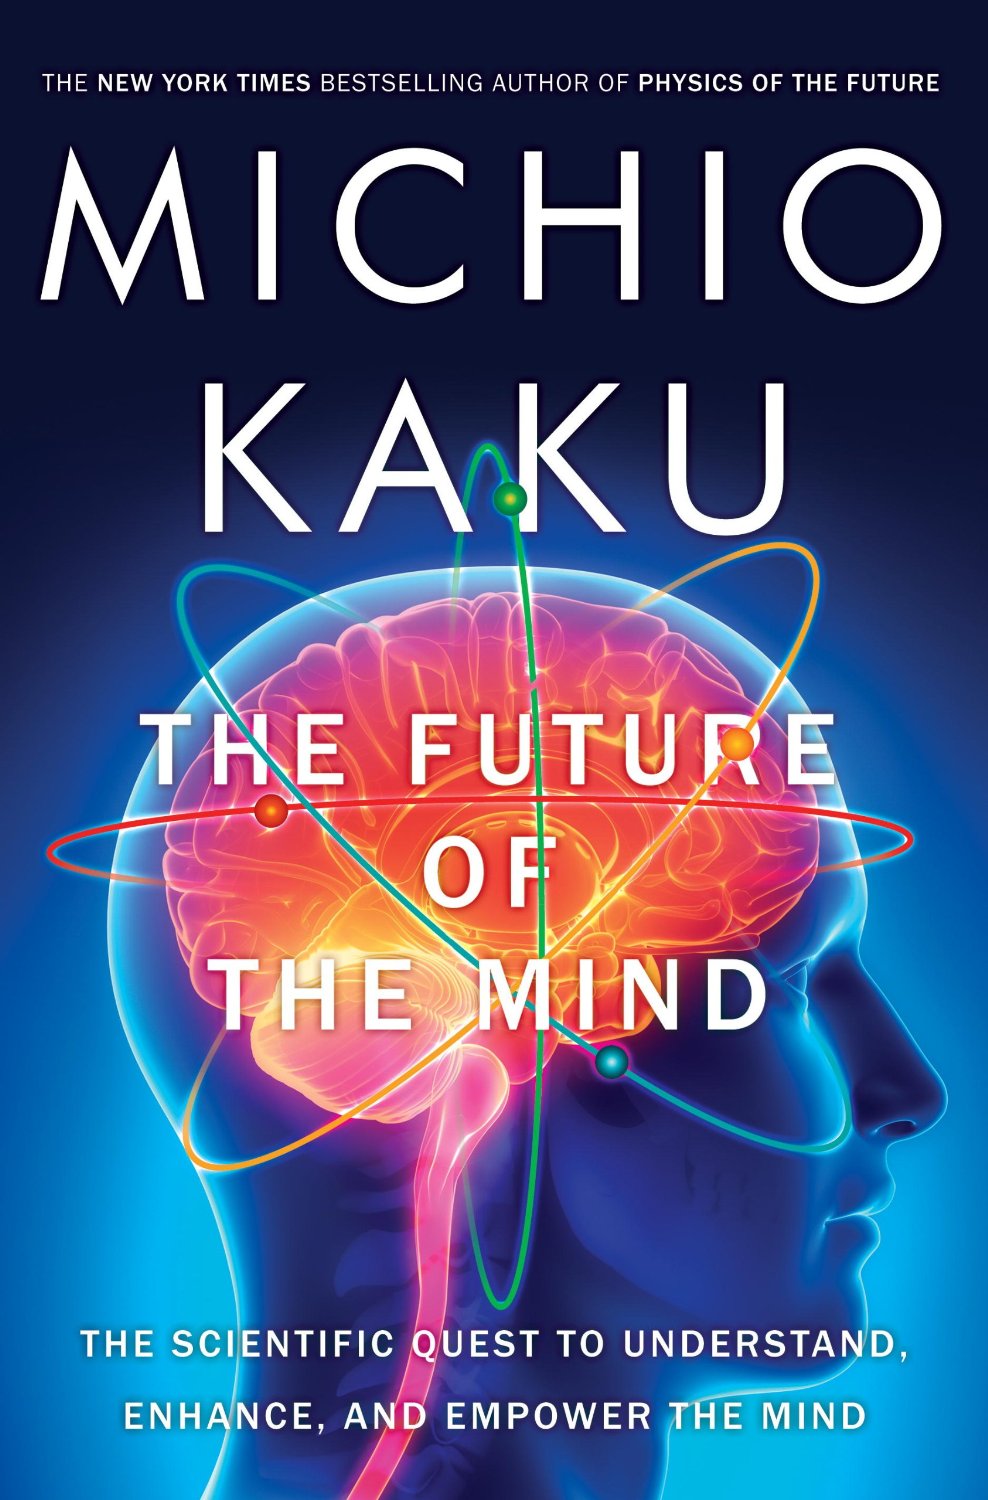 The Future of the Mind, by Michio Kaku